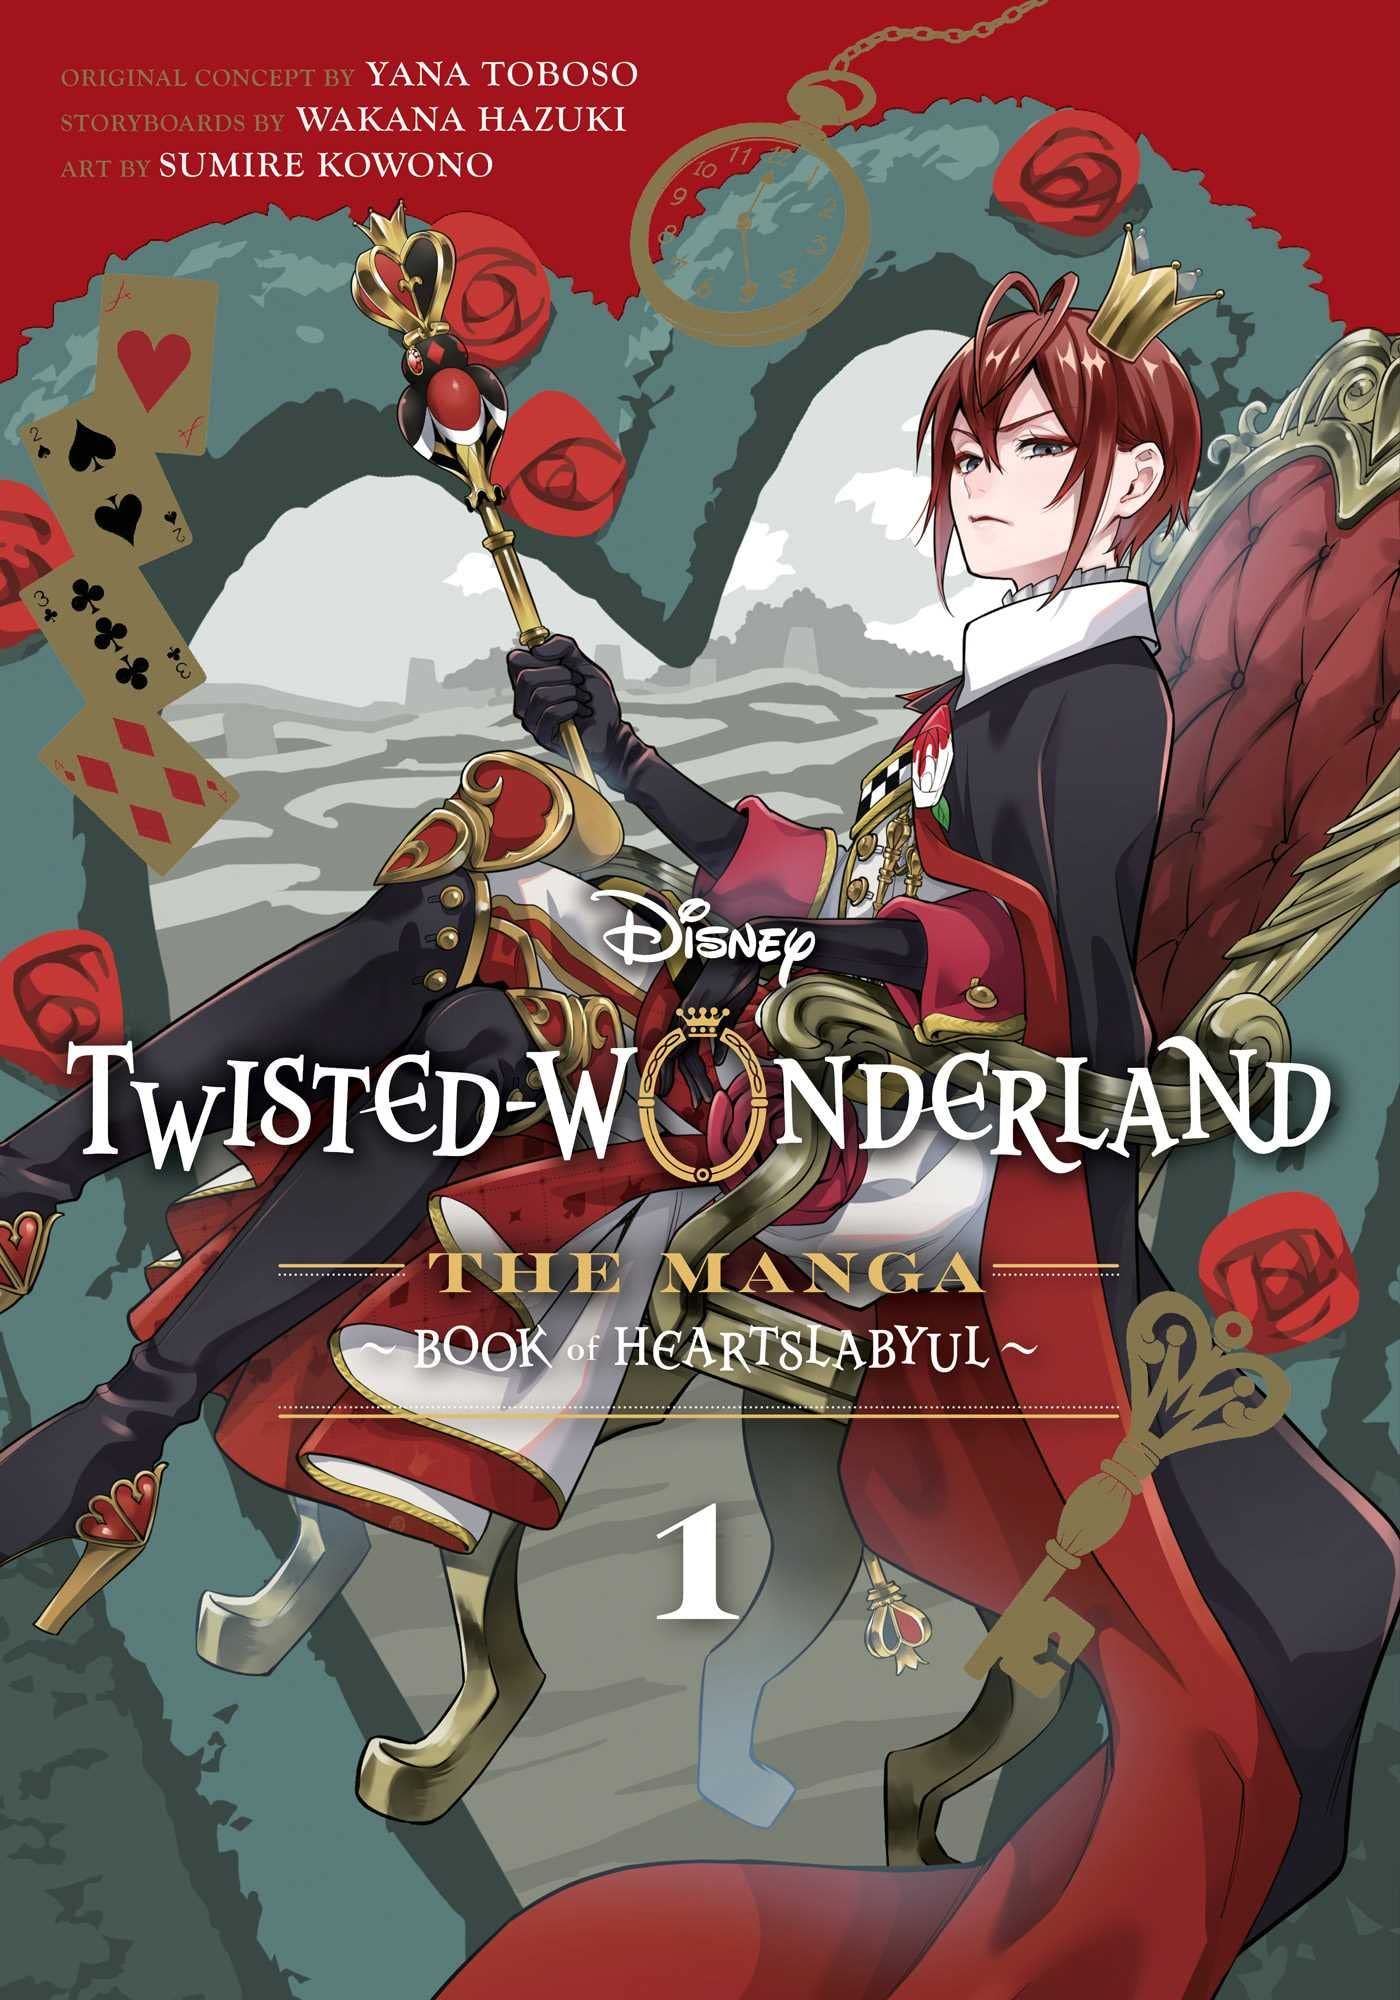 Disney Twisted-Wonderland by Yana Toboso, Wakana Hazuki, and Sumire Kowono cover